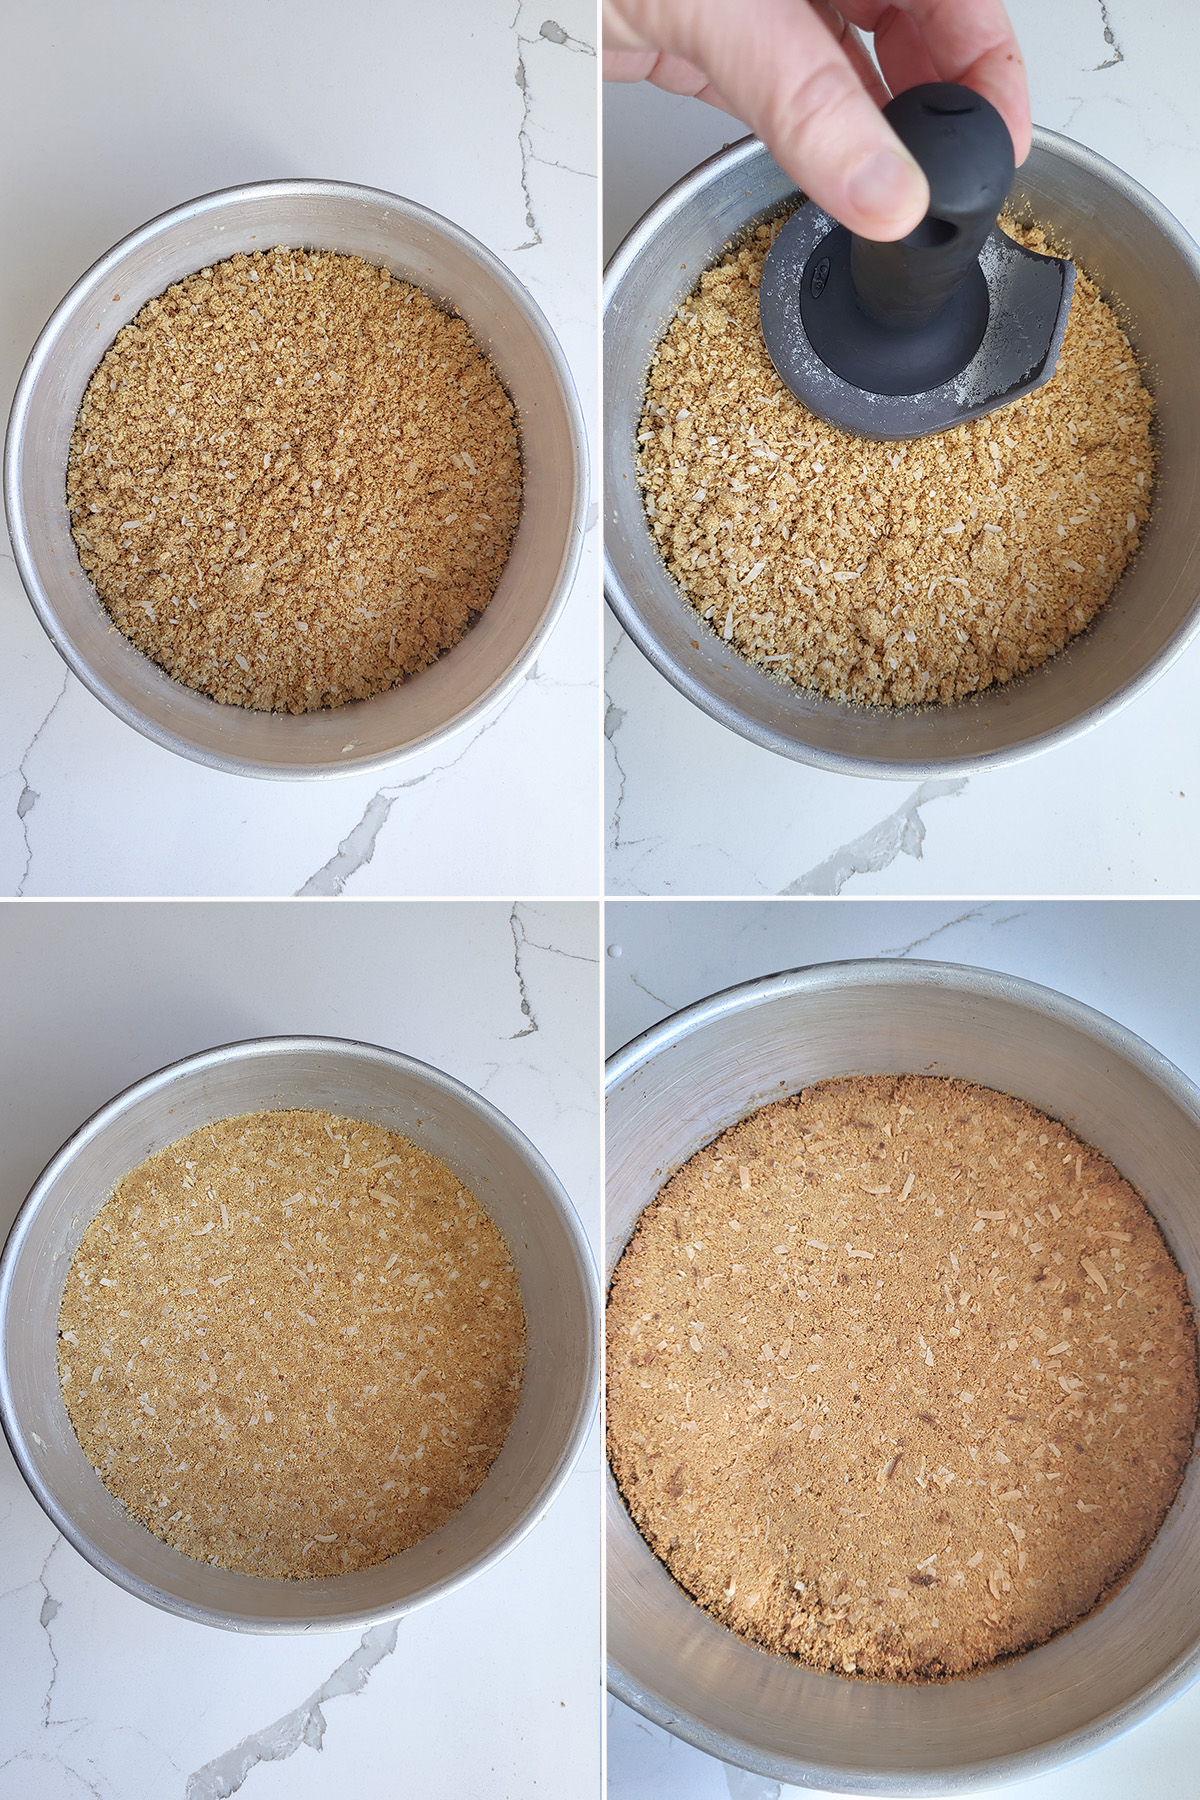 Graham cracker crumbs make a crust in a cake pan.